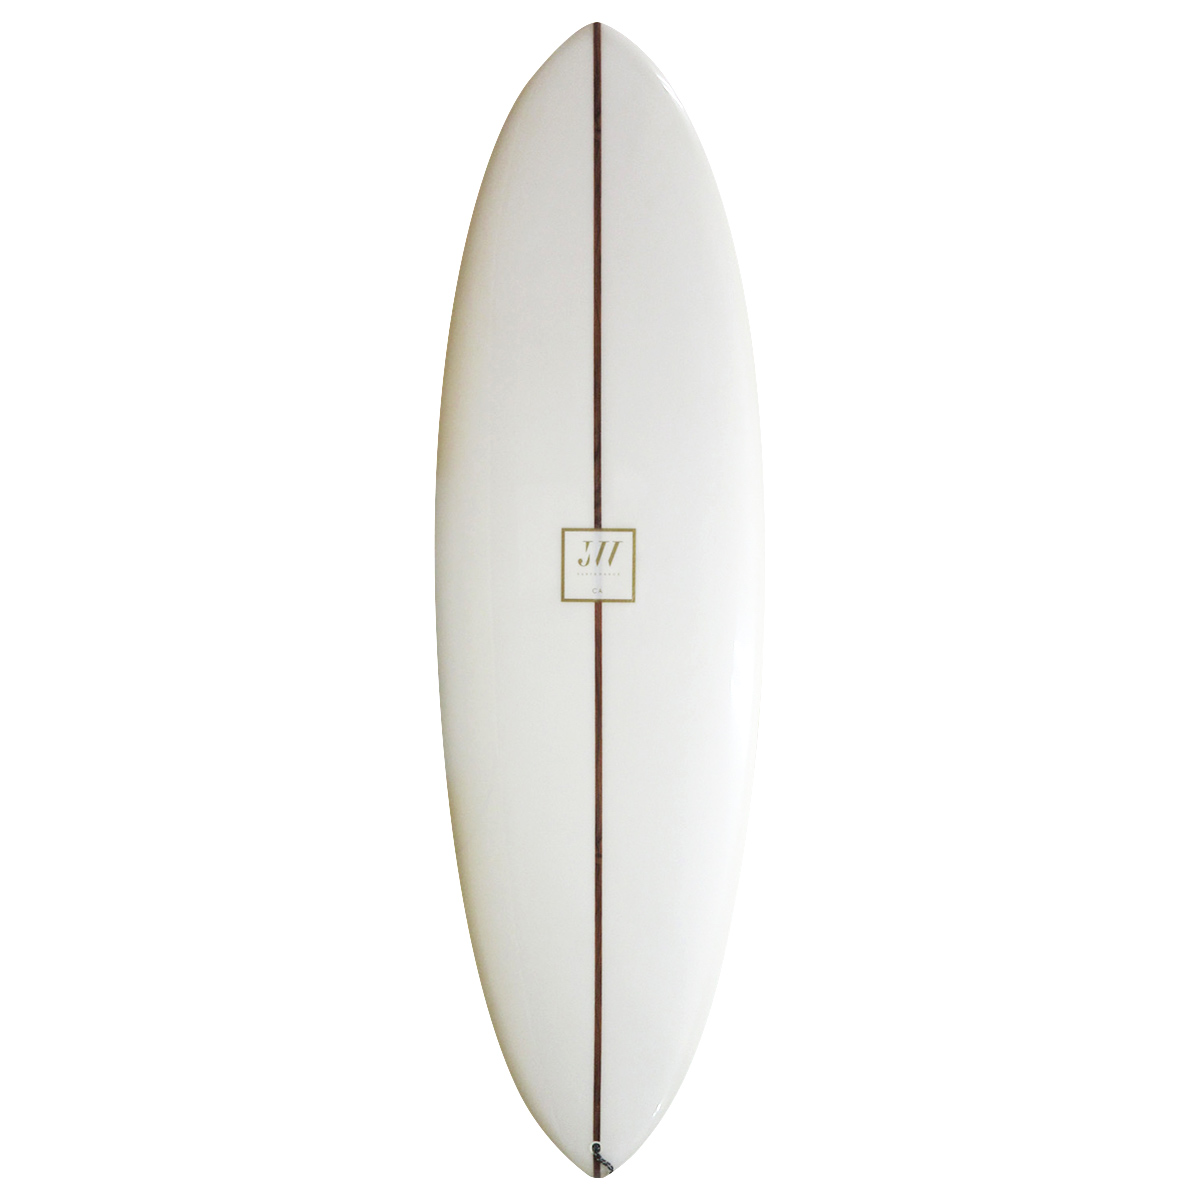 JOHN WESLEY SURFBOARDS  / TFP 5'11 EPS